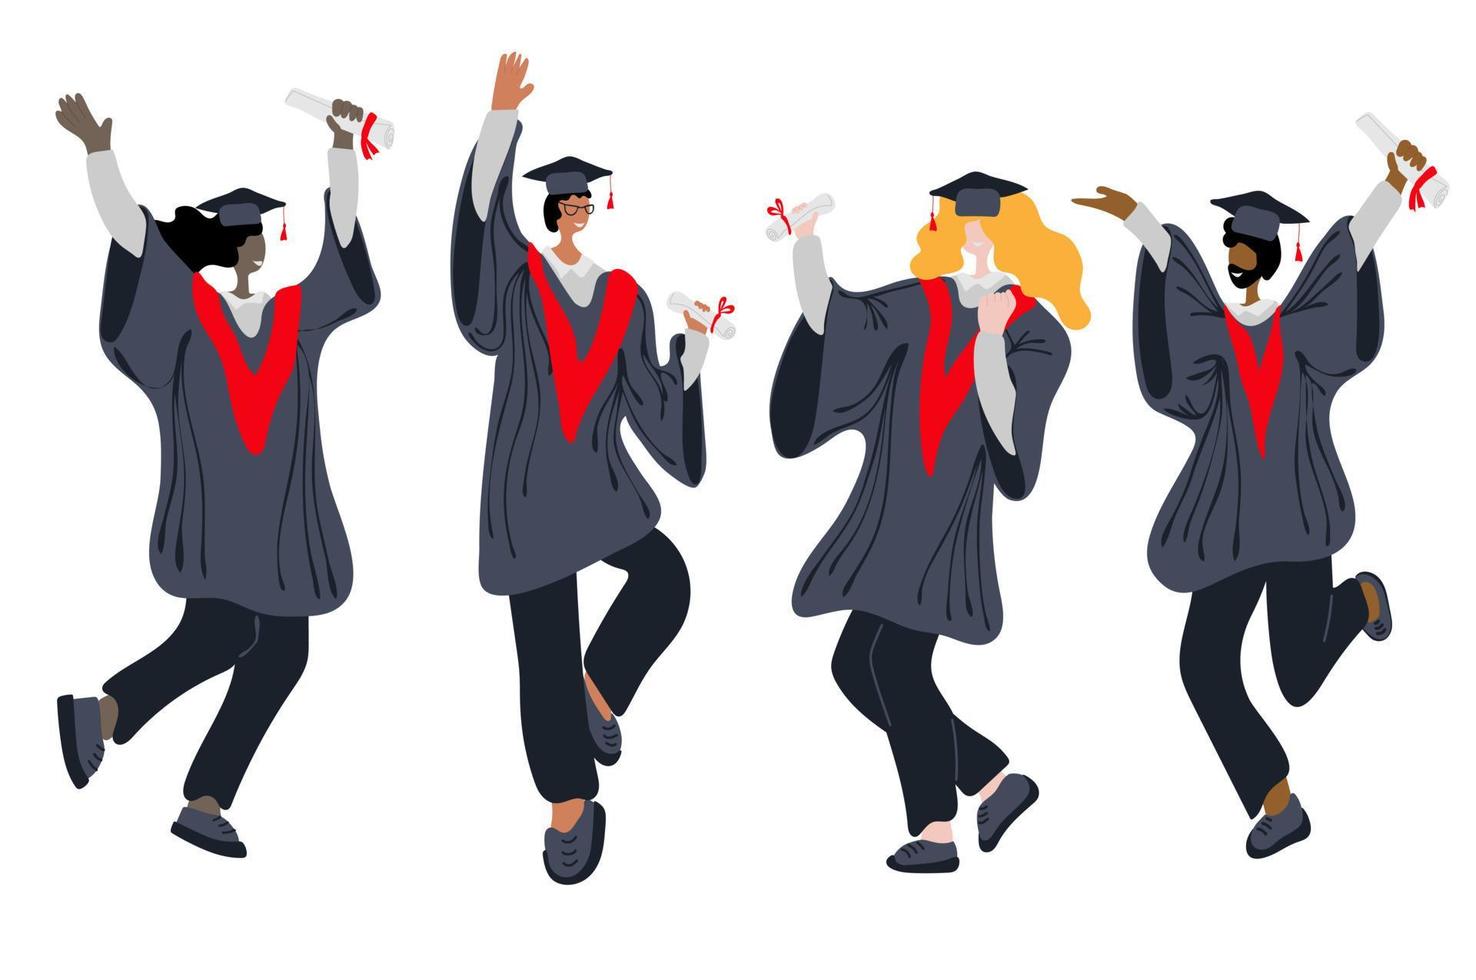 University graduates. A group of happy diverse international graduates in academic gown, graduation caps, holding diploma vector